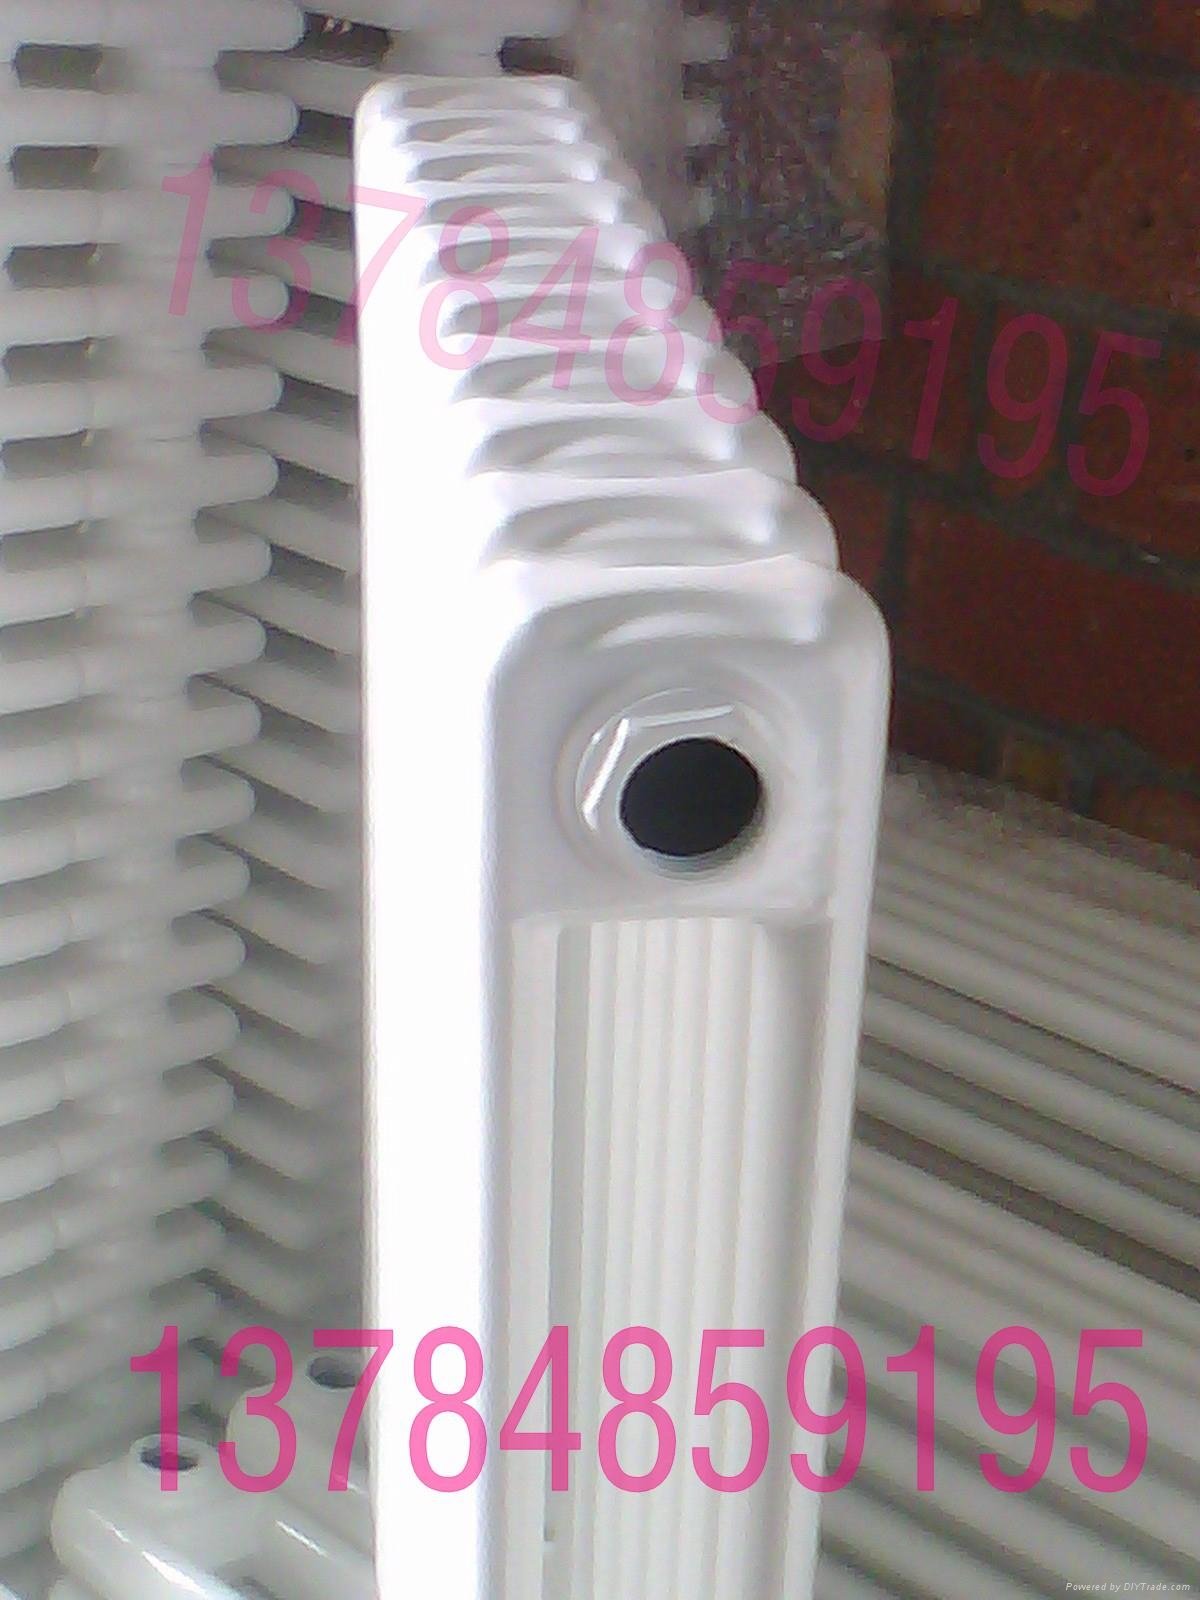 SCGGZT2-1.0/X-1.0型钢制柱形暖气片散热器钢制柱型散热器 4